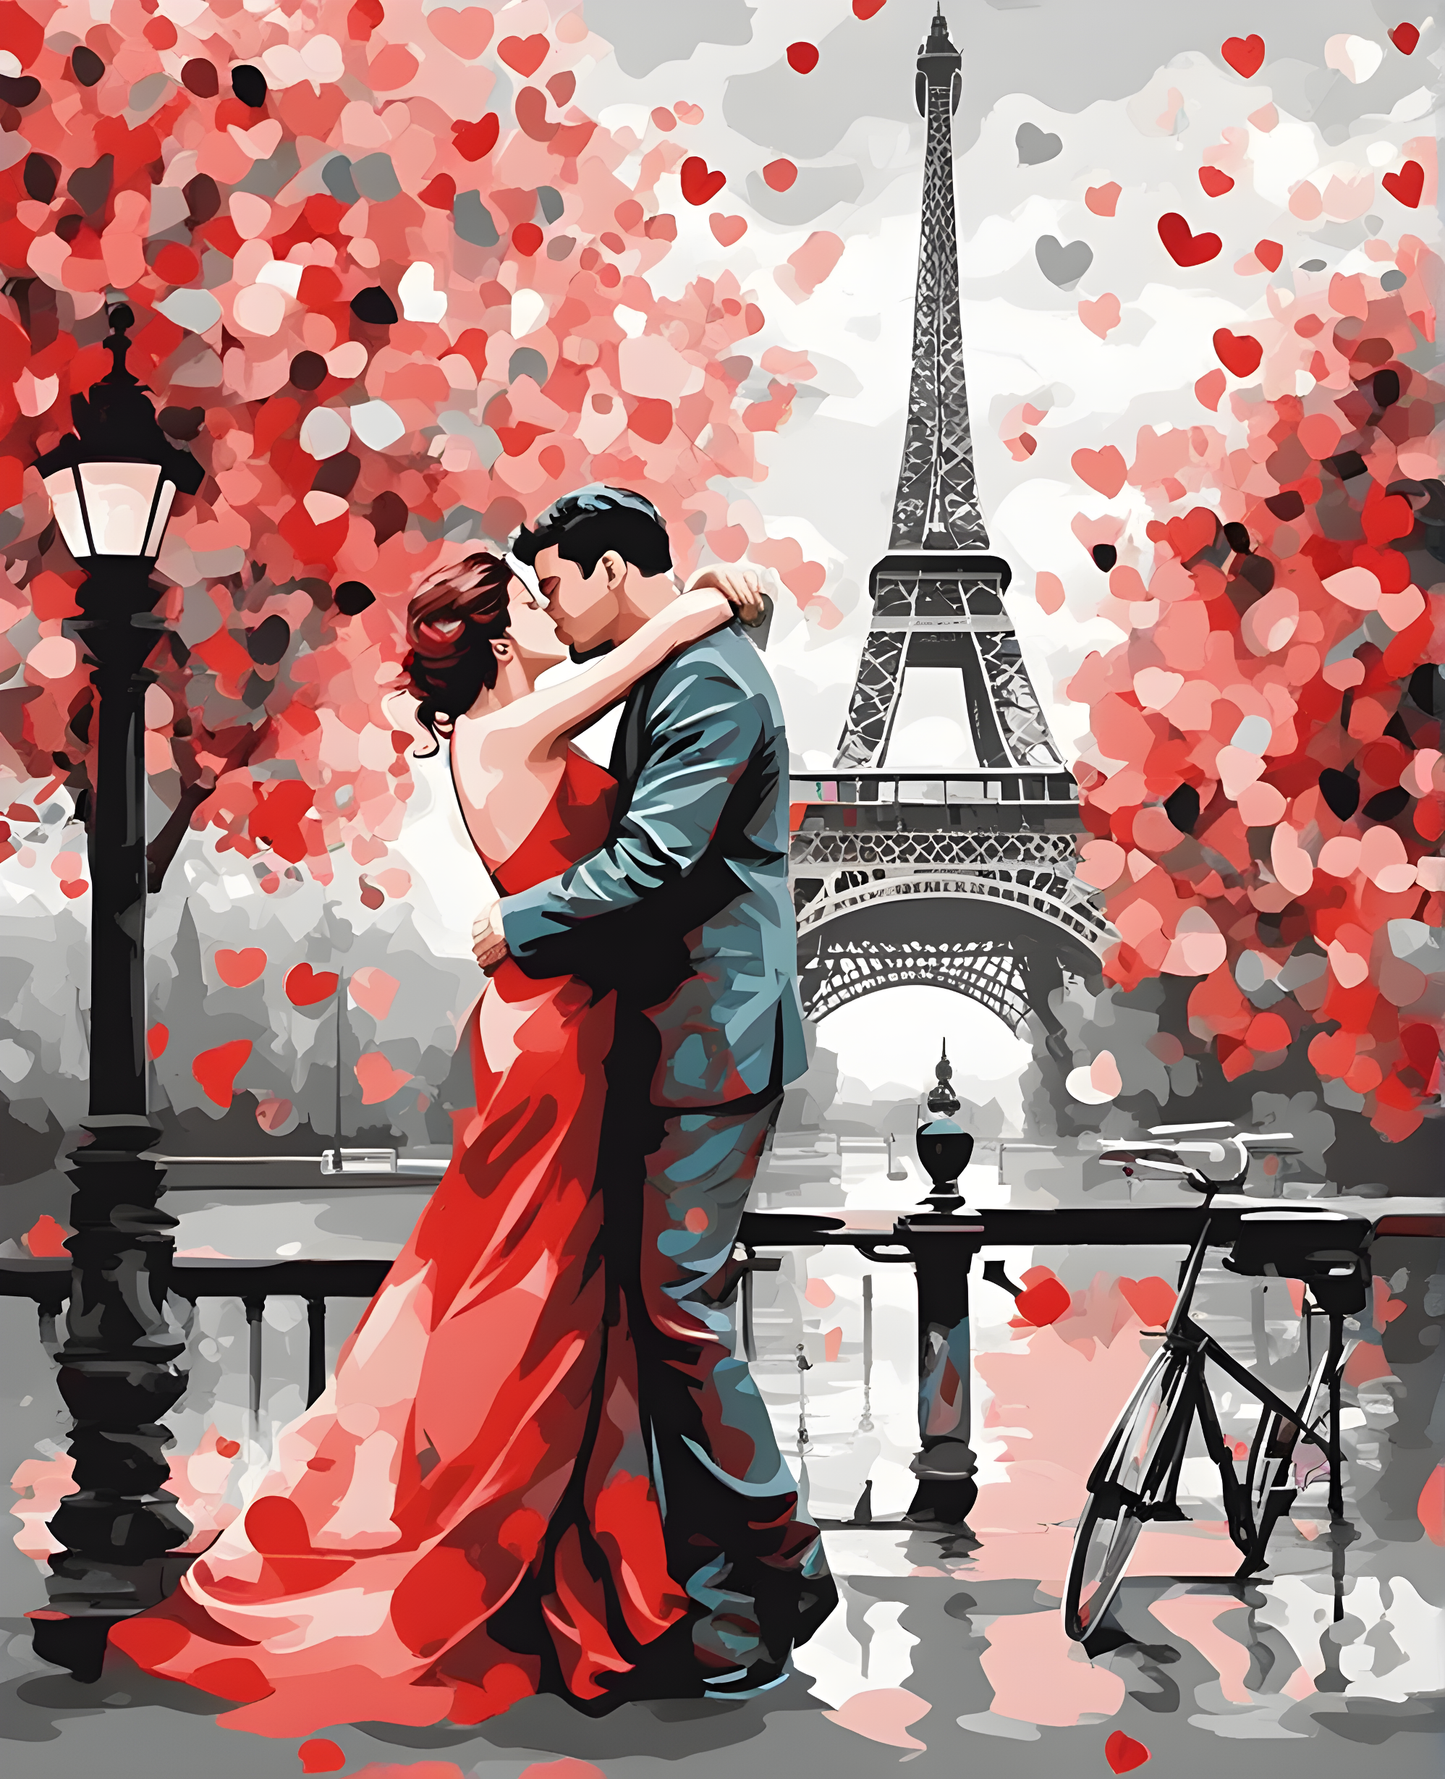 A kiss in Paris (1)  - Van-Go Paint-By-Number Kit